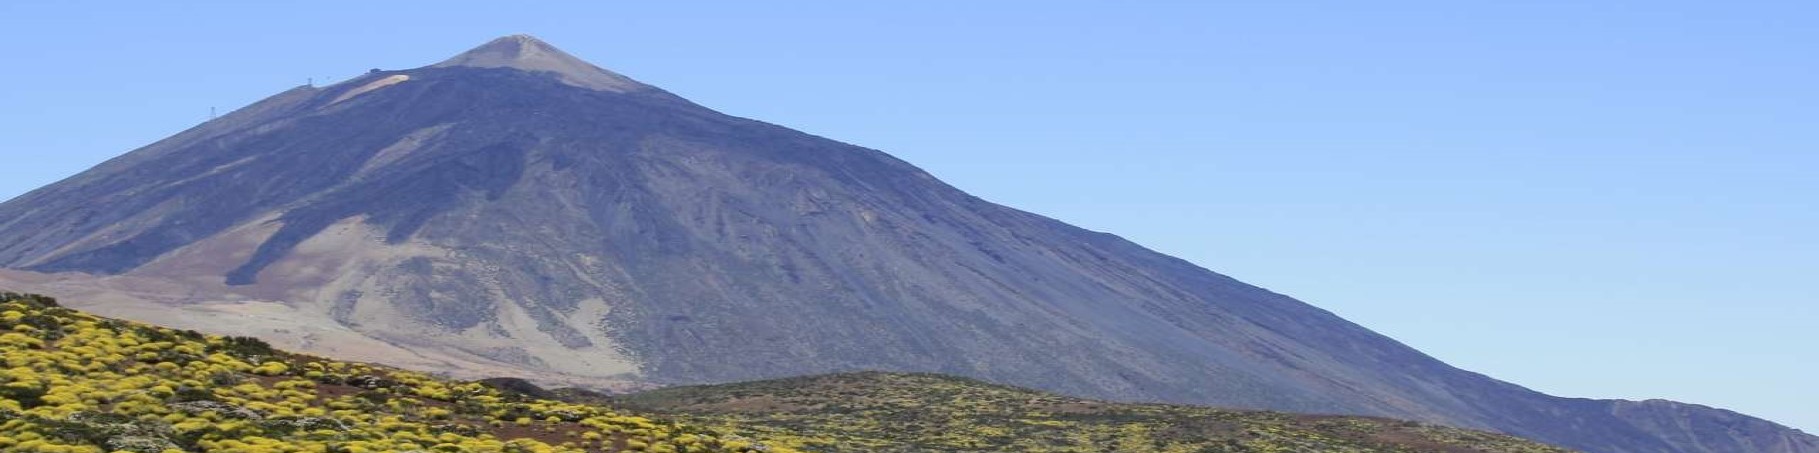 Tenerife : De la mer a la montagne 